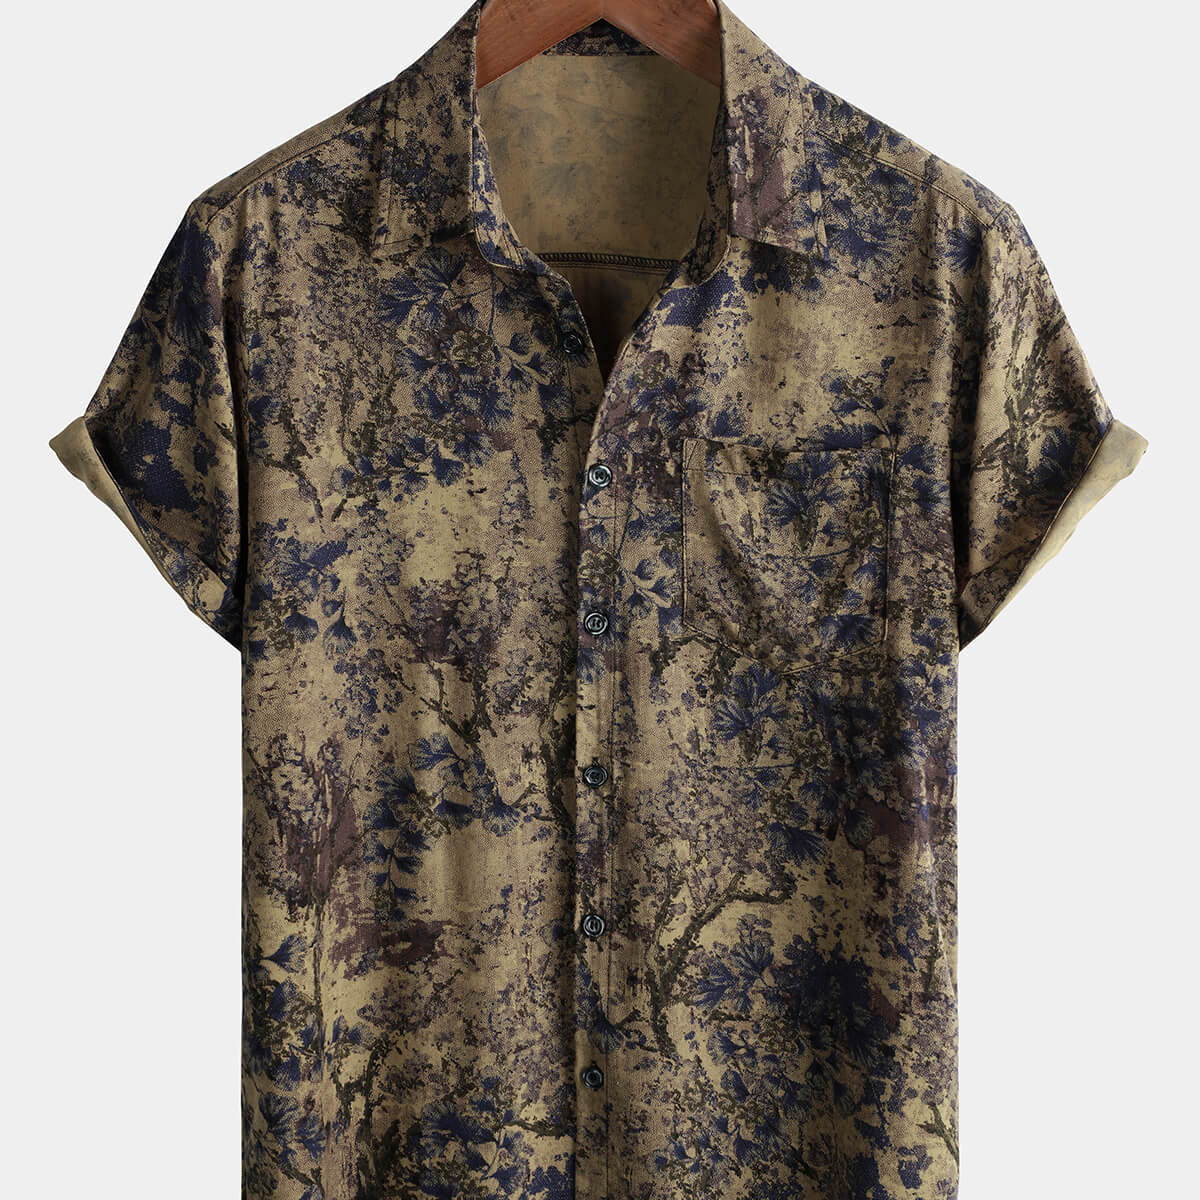 Men's Retro Floral Print Casual Short Sleeve Holiday Shirt